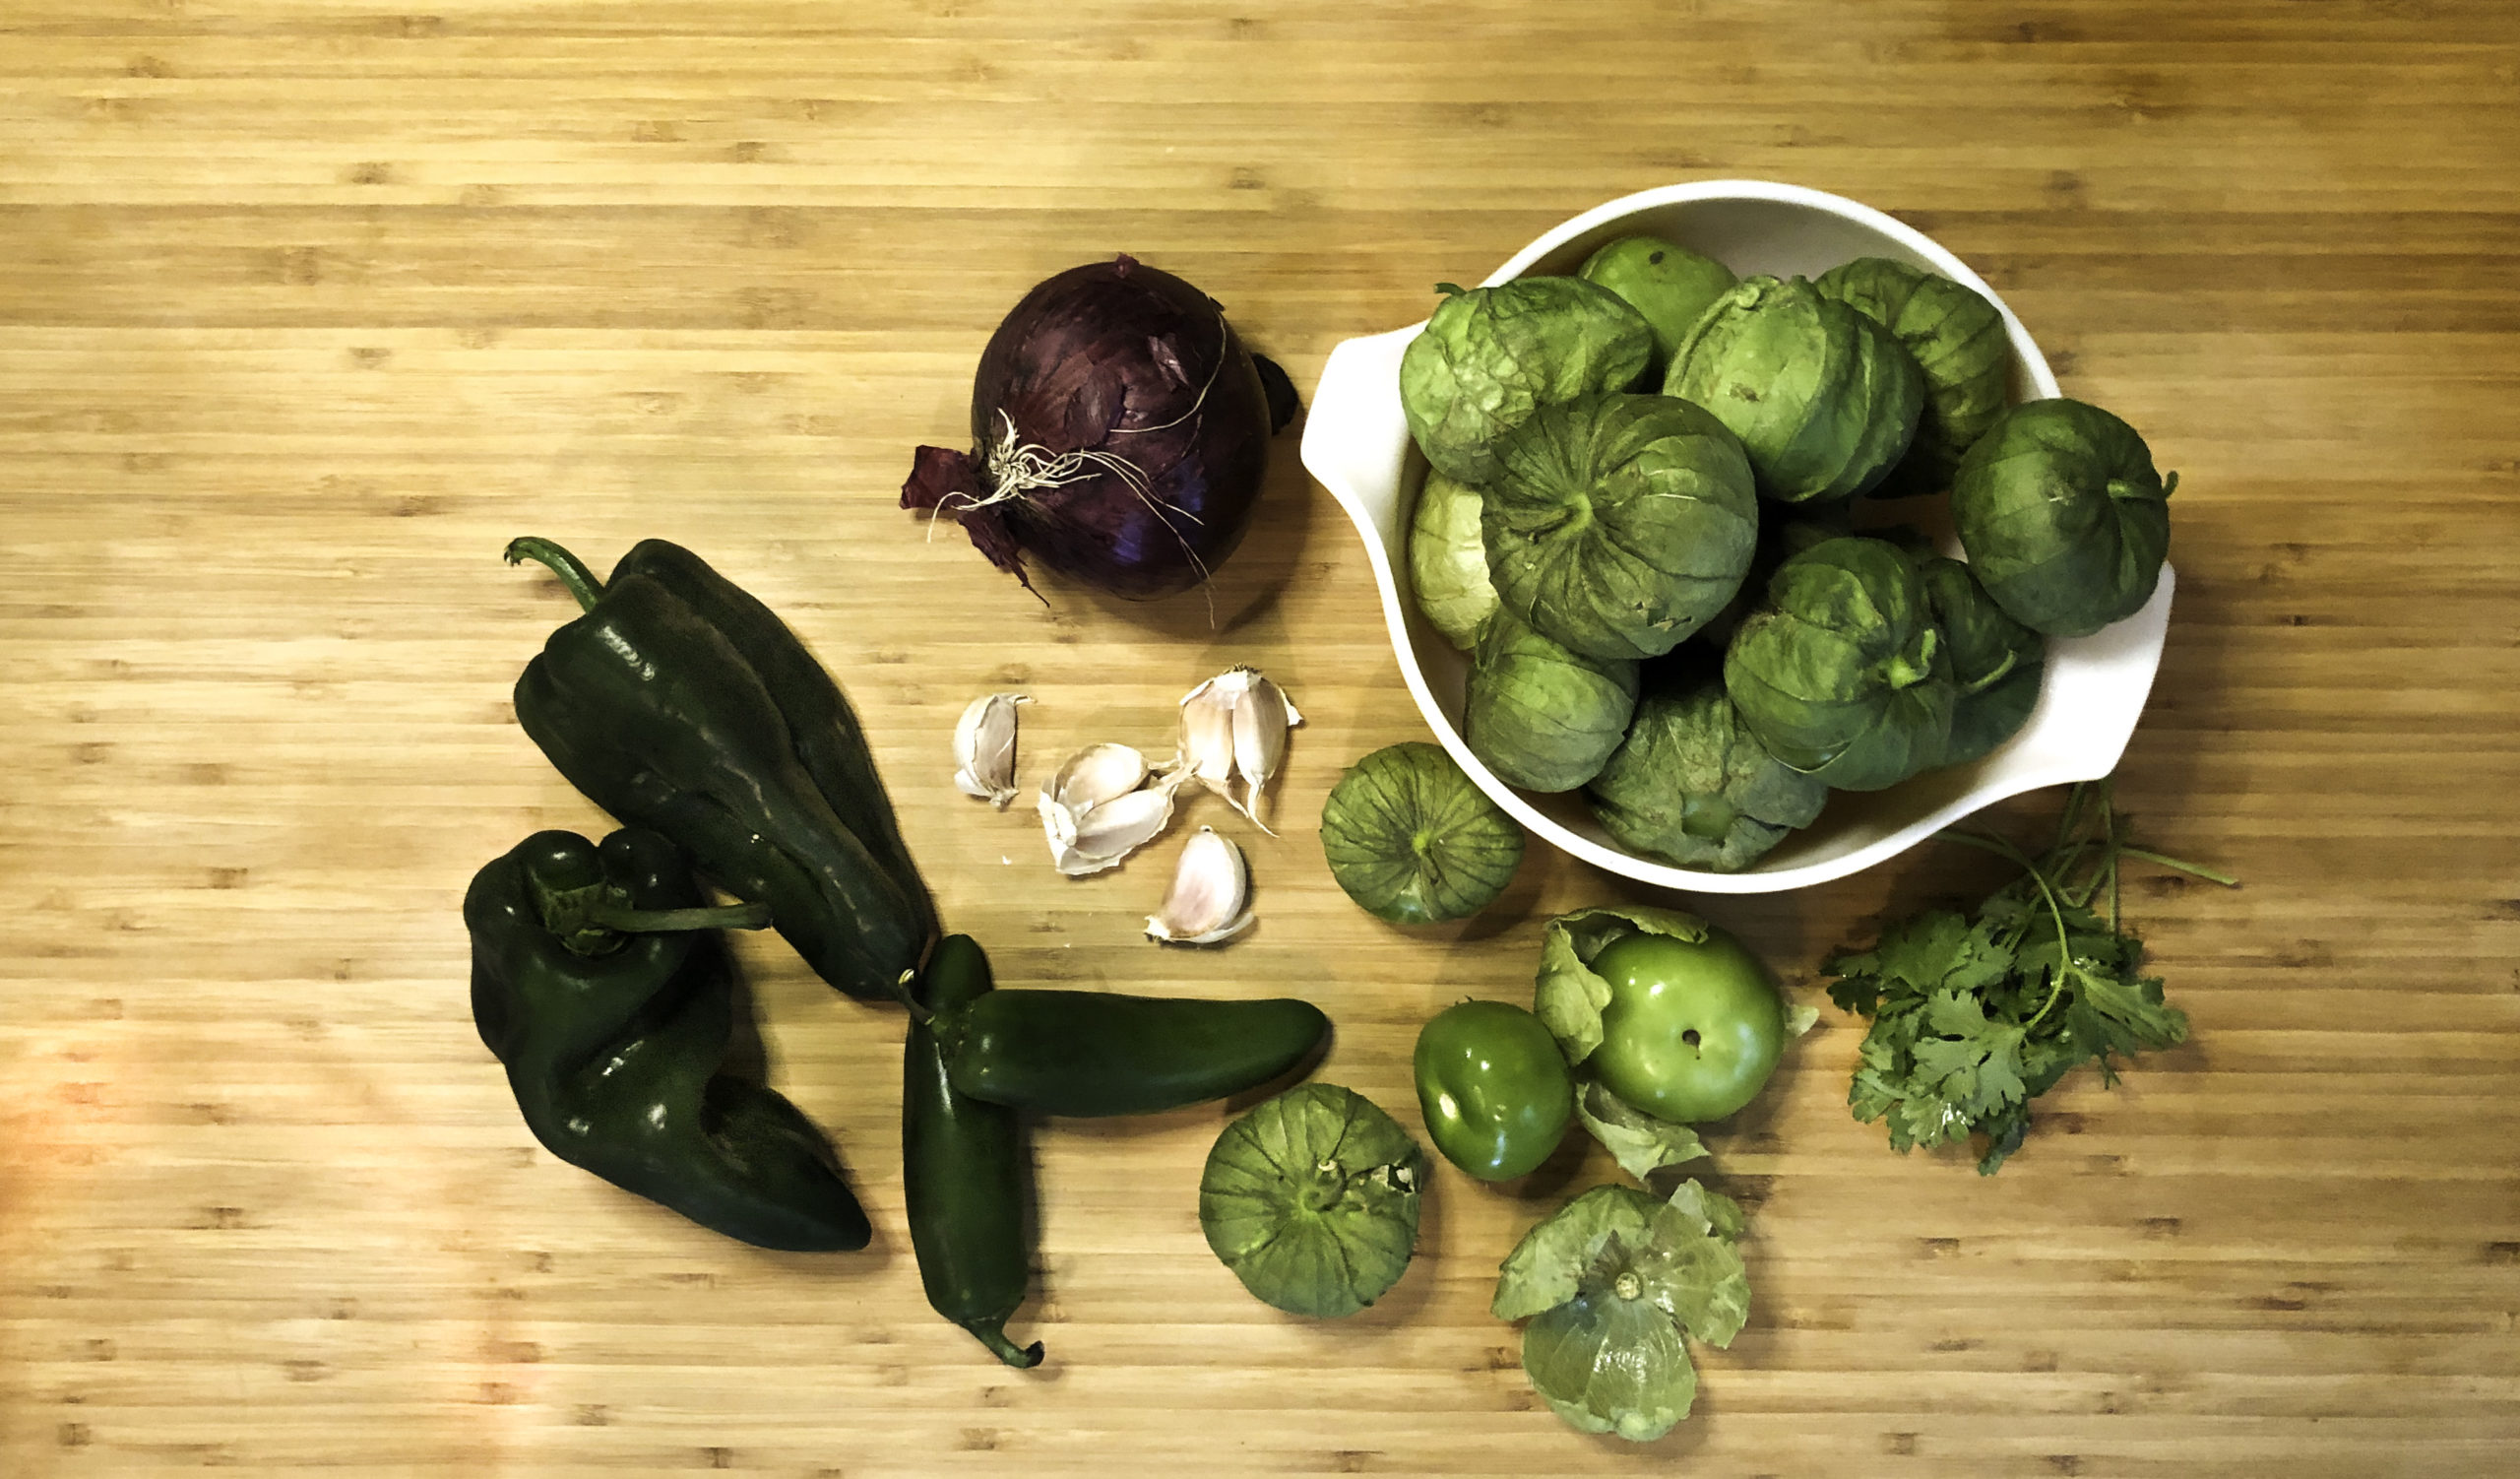 Ingredients for roasted salsa verde: Poblanos, jalapeños, tomatillos, garlic, cilantro, red onion